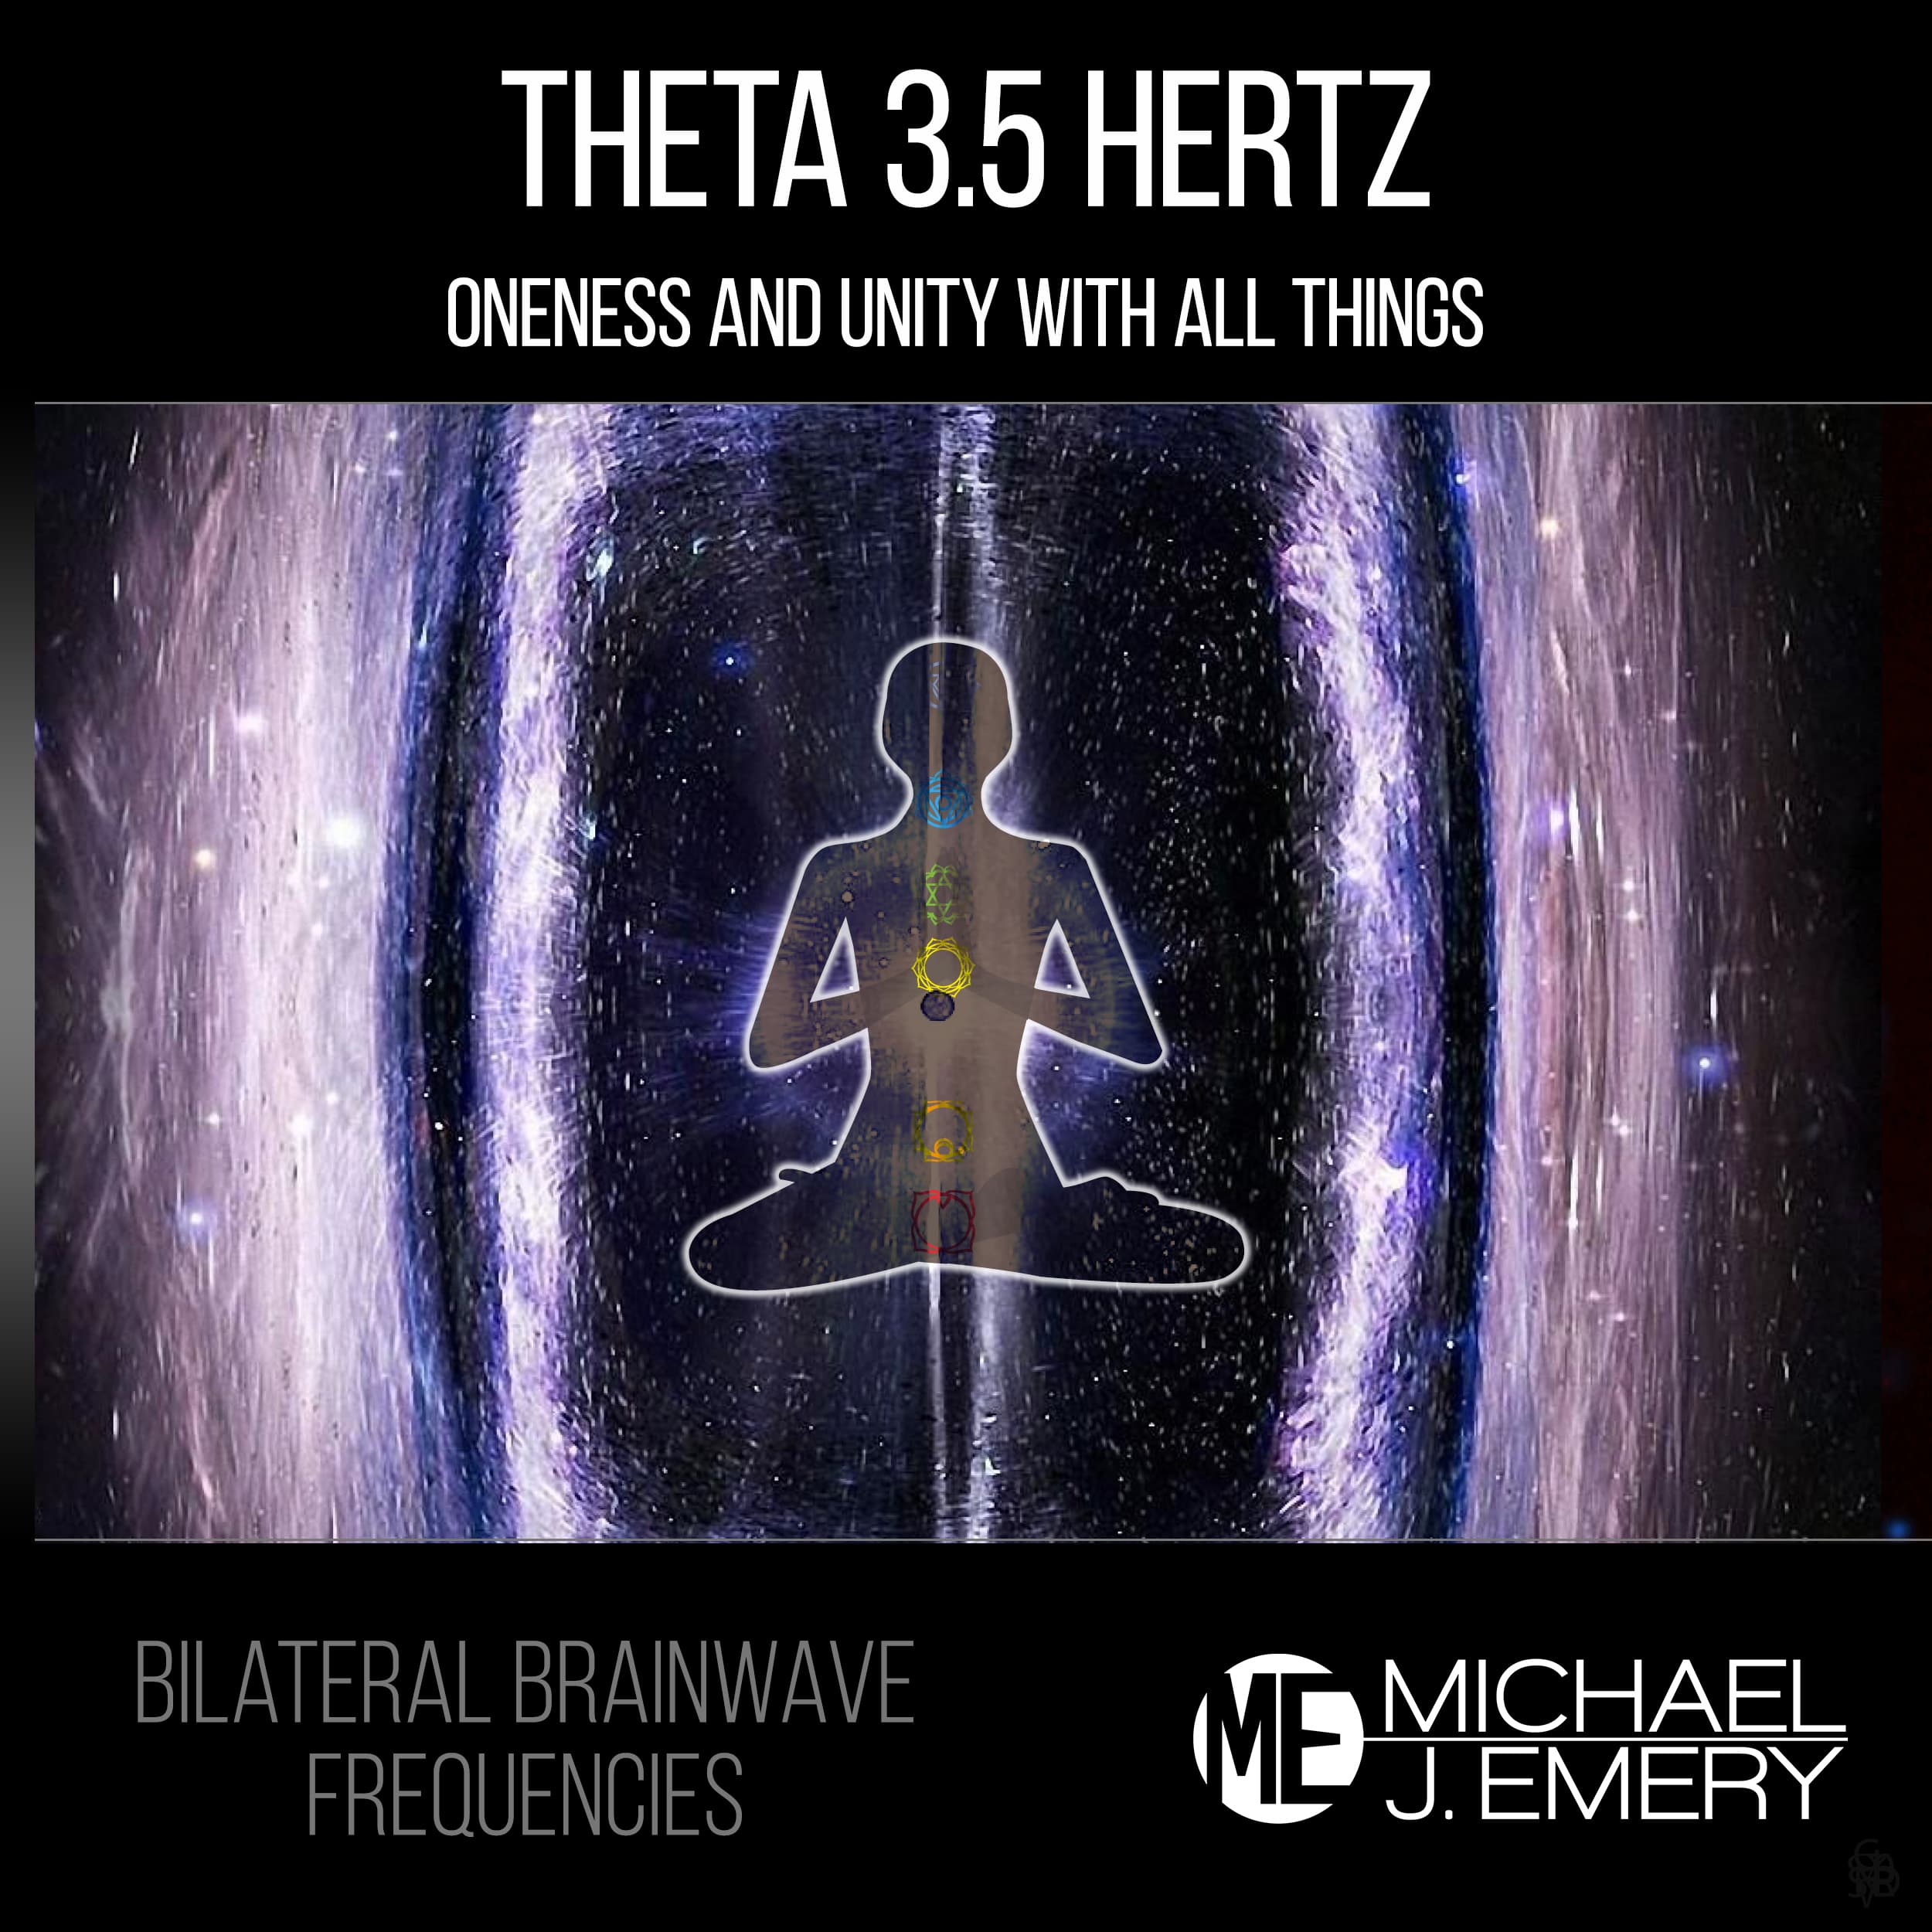 theta 3.5 hertz